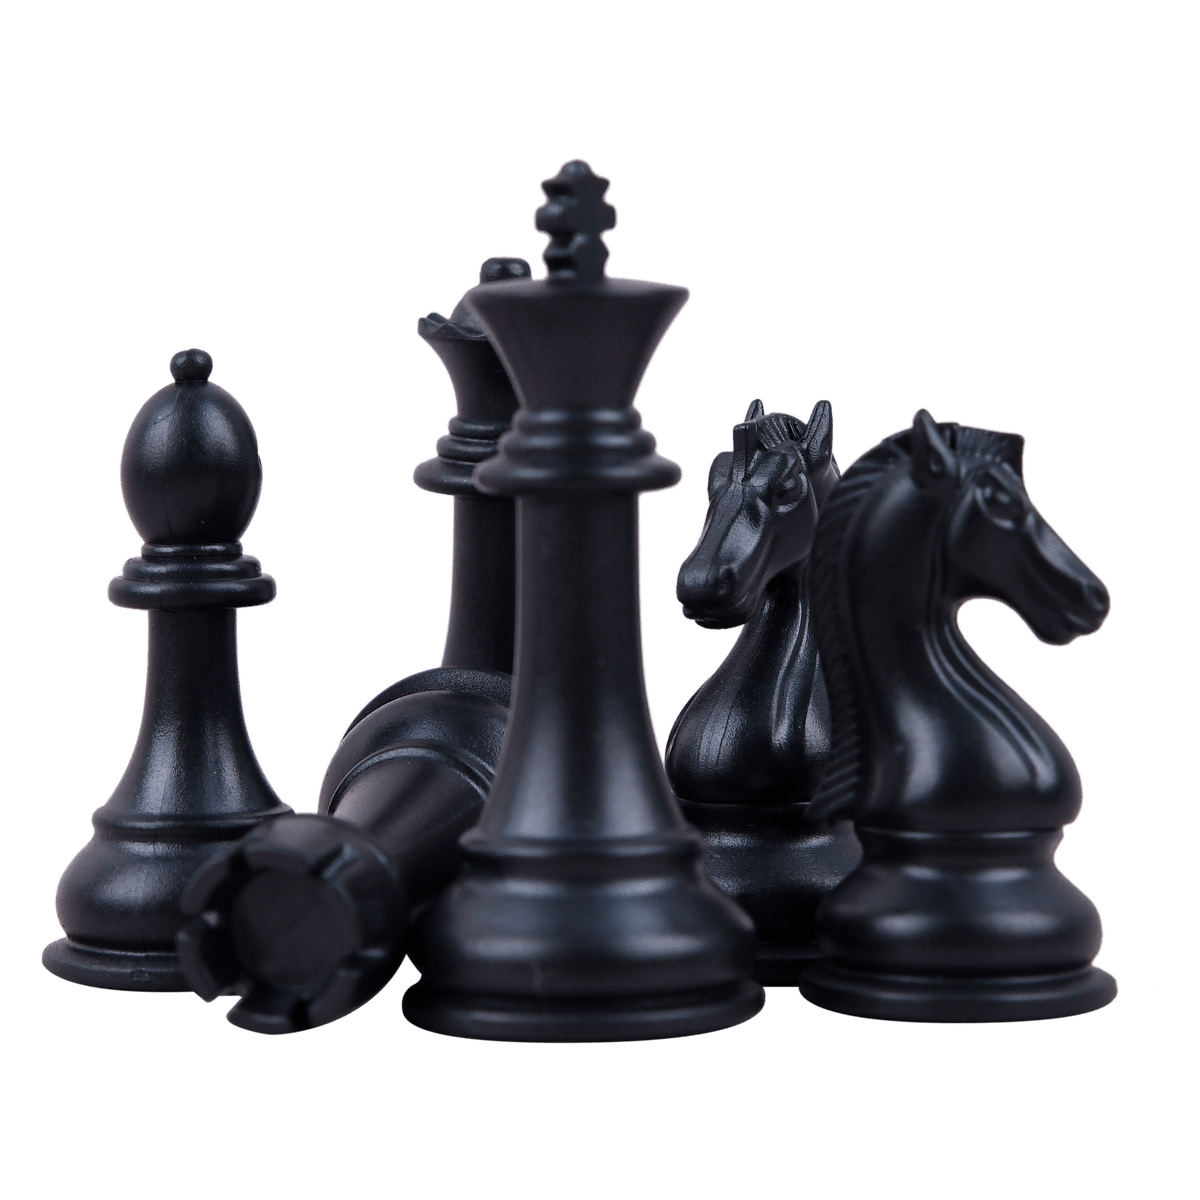 ZugZwang Academy - Zugzwang Academy - India's Finest Chess Academy Online  Chess Classes For Demo Goto ---  #Zugzwang  #Zugzwangchess #puzzle #tactics #criticalthinking #chesspuzzles  #chessplayer #onlinechess #chess #Zugzwang